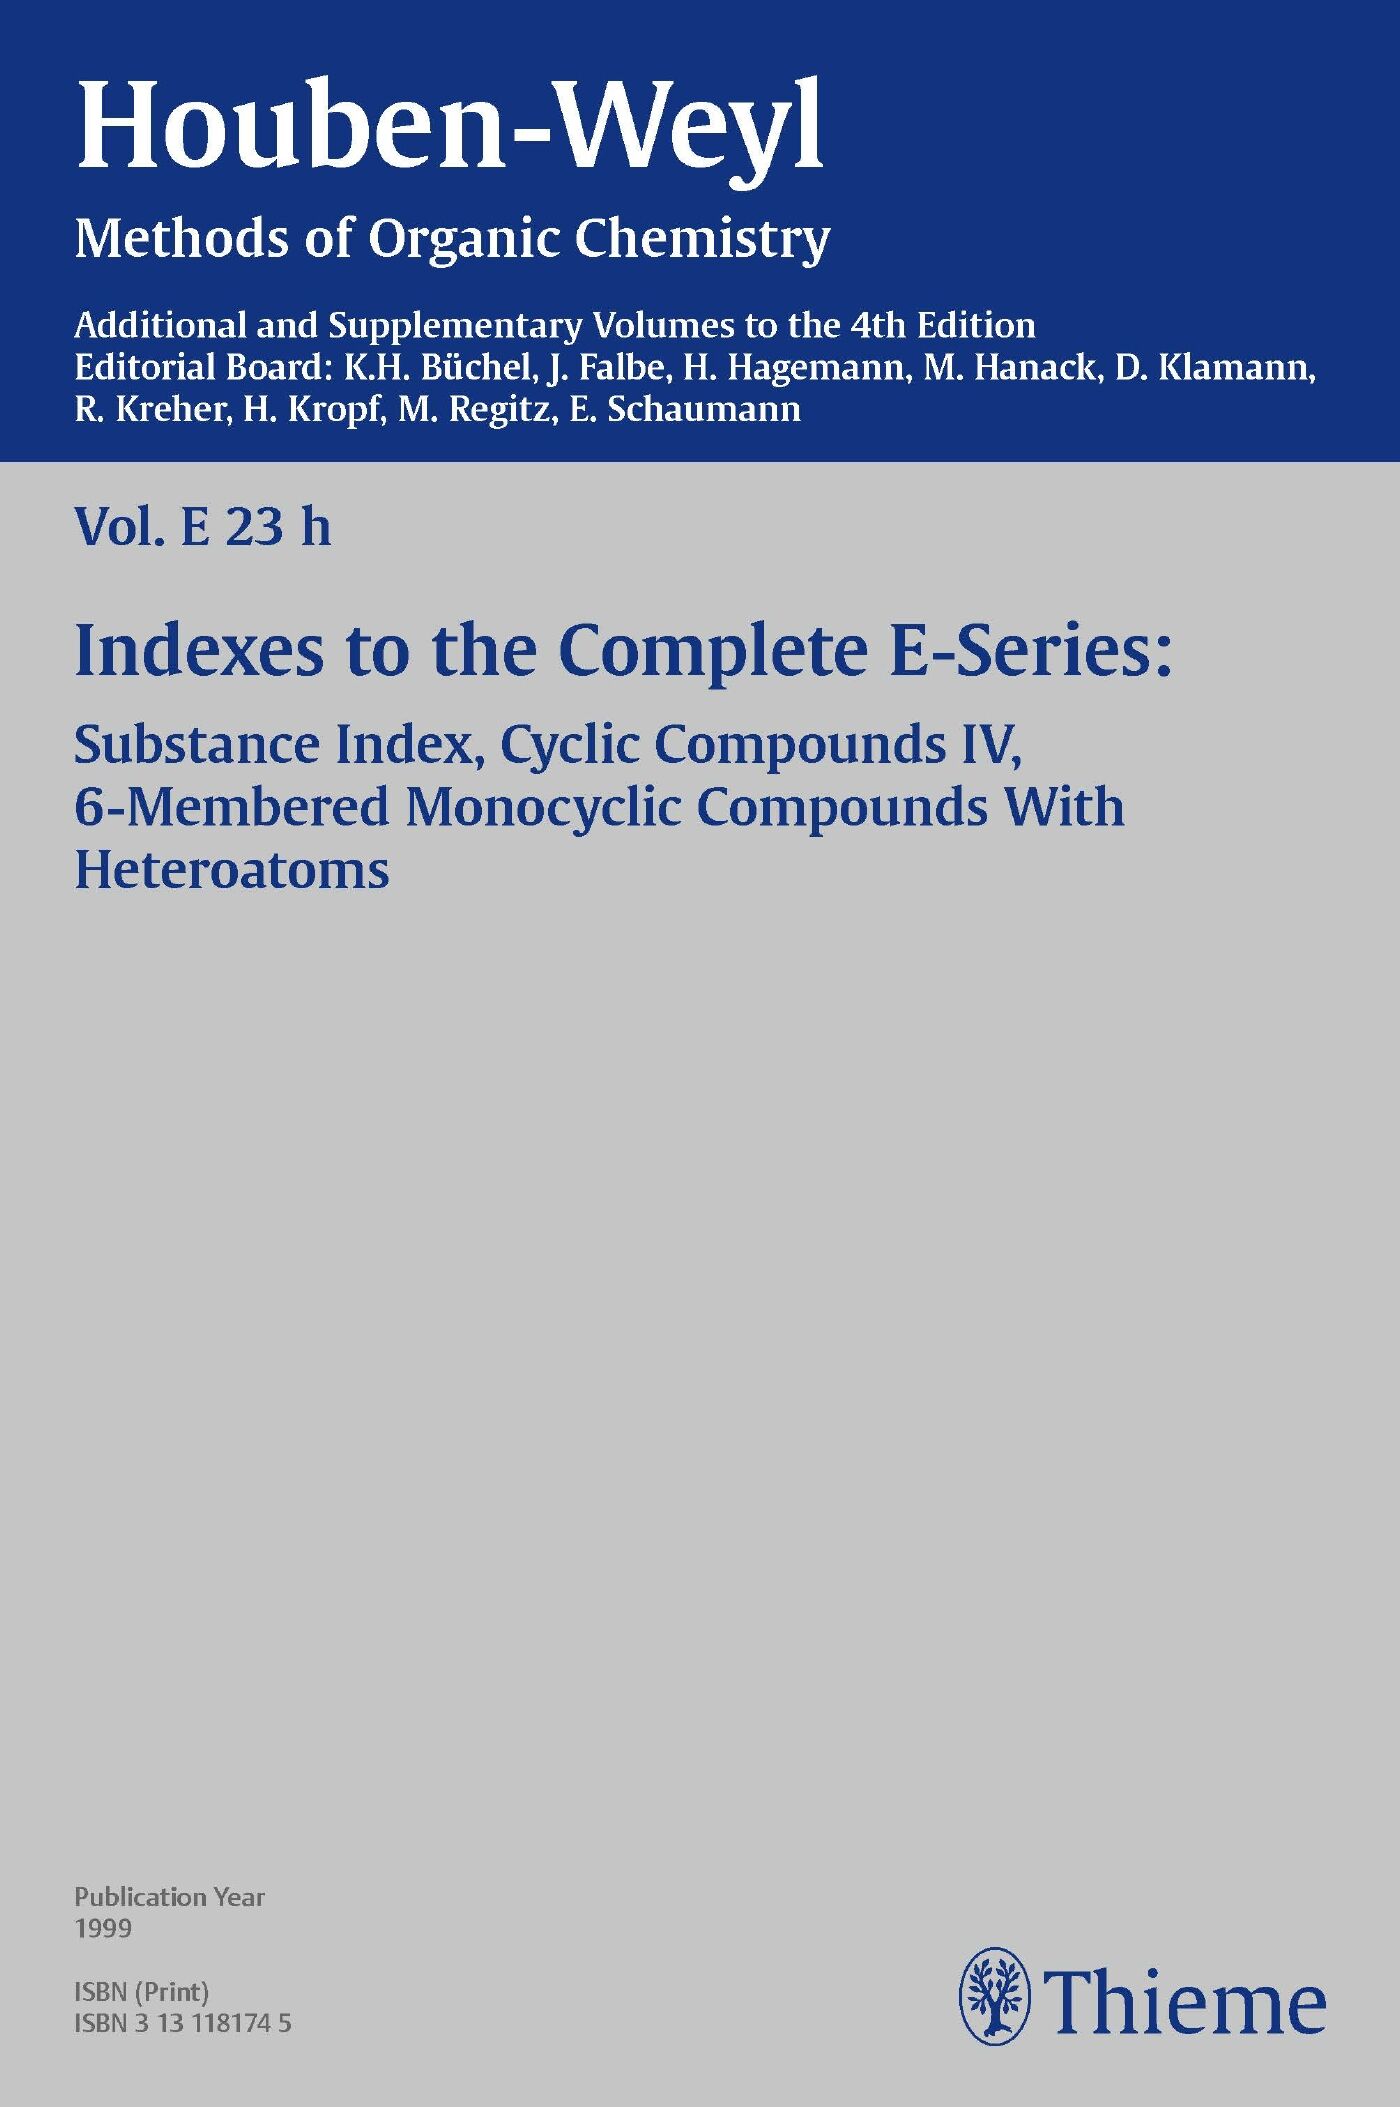 Houben-Weyl Methods of Organic Chemistry Vol. E 23h, 4th Edition Supplement, 9783131824547